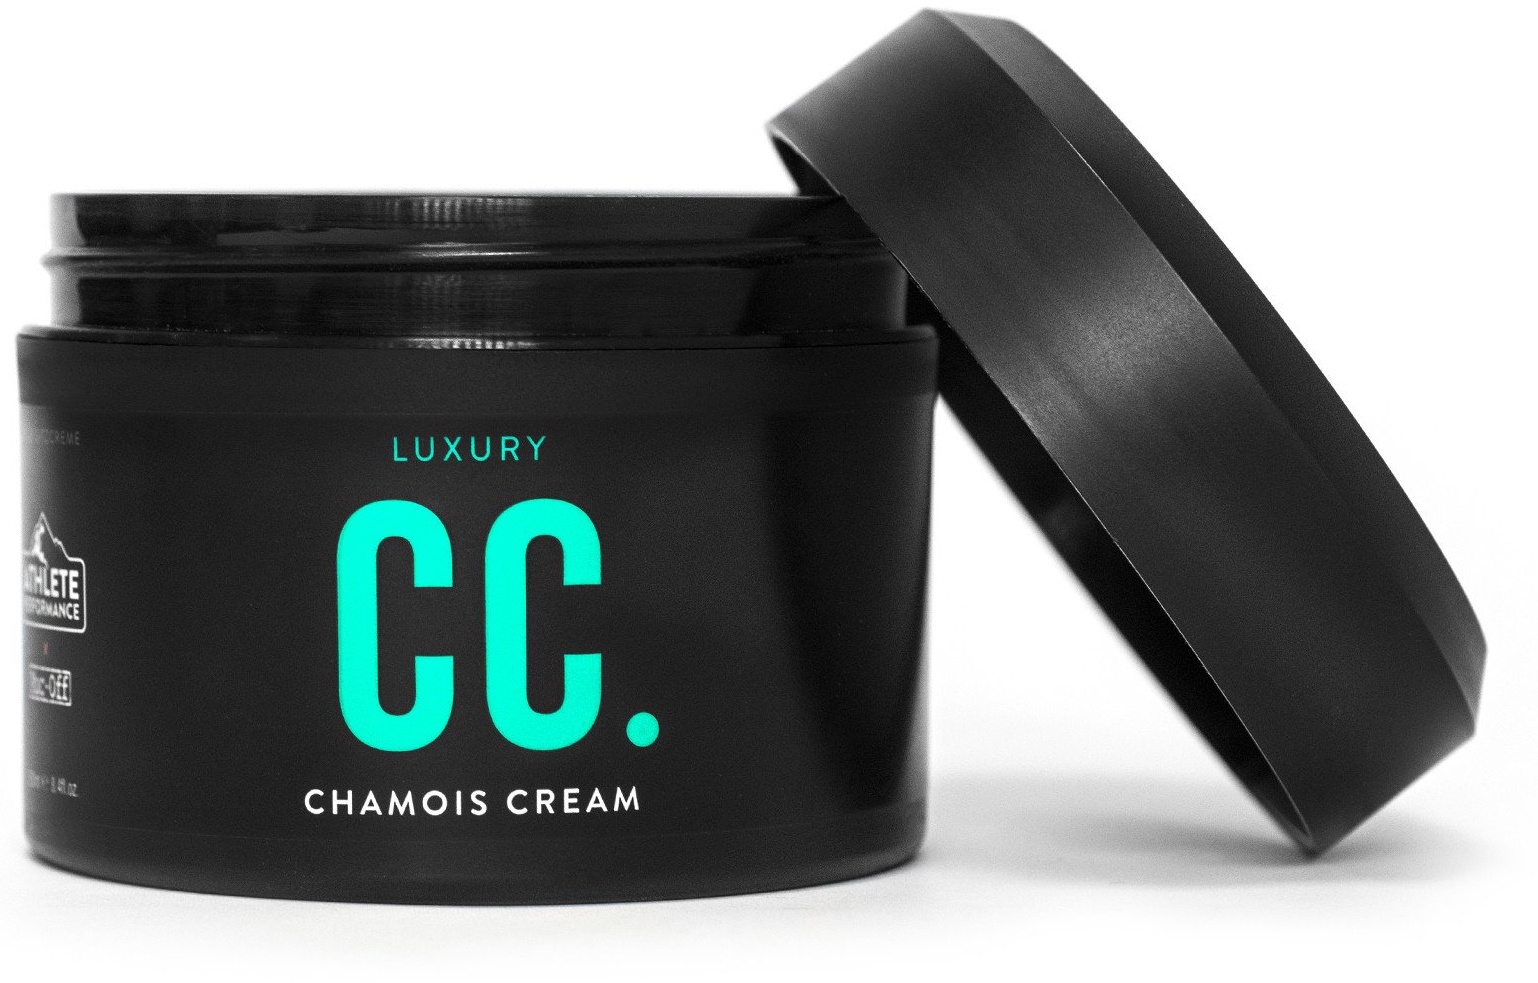 Beklædning - Krops- & tøjpleje - Muc-Off Luxury Chamois Cream Buskefedt - 250 ml